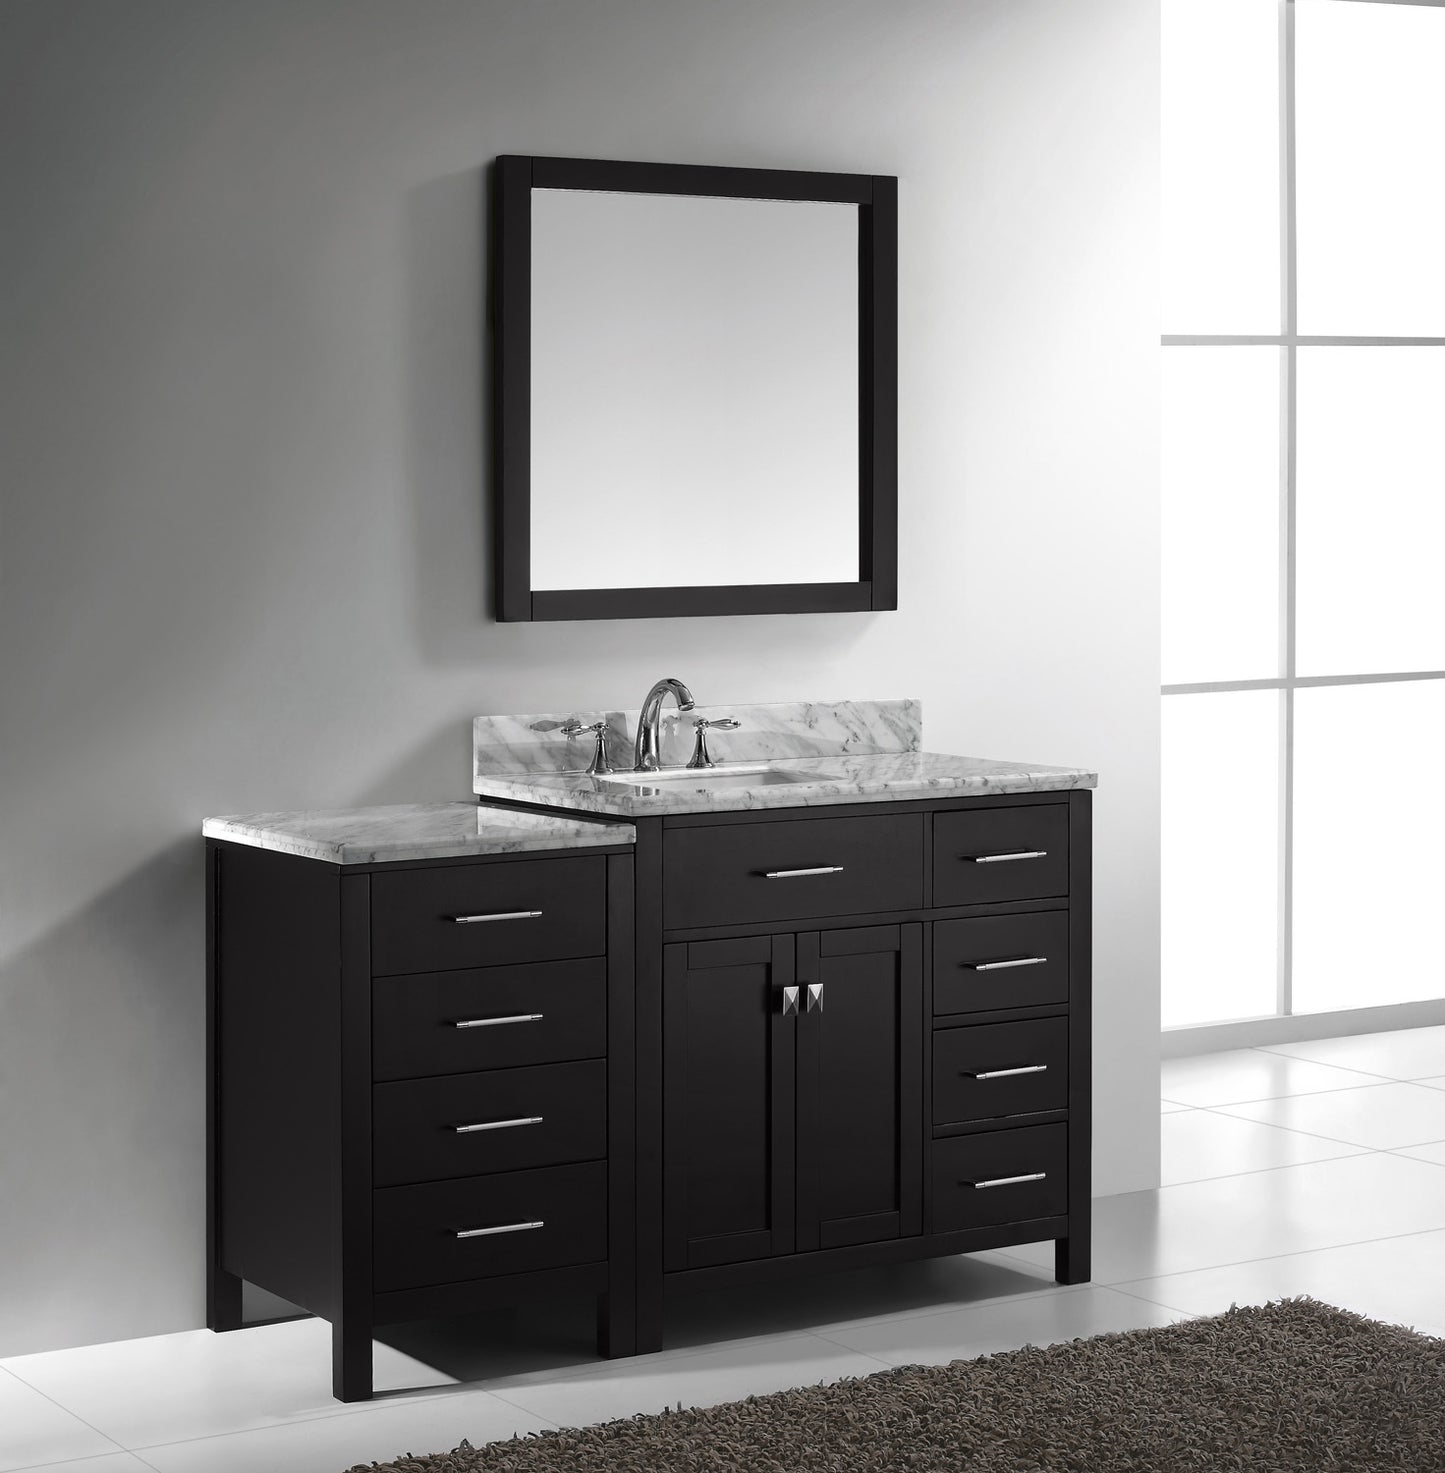 Virtu USA Caroline Parkway 57" Single Bath Vanity in Espresso with Marble Top and Square Sink with Mirror - Luxe Bathroom Vanities Luxury Bathroom Fixtures Bathroom Furniture